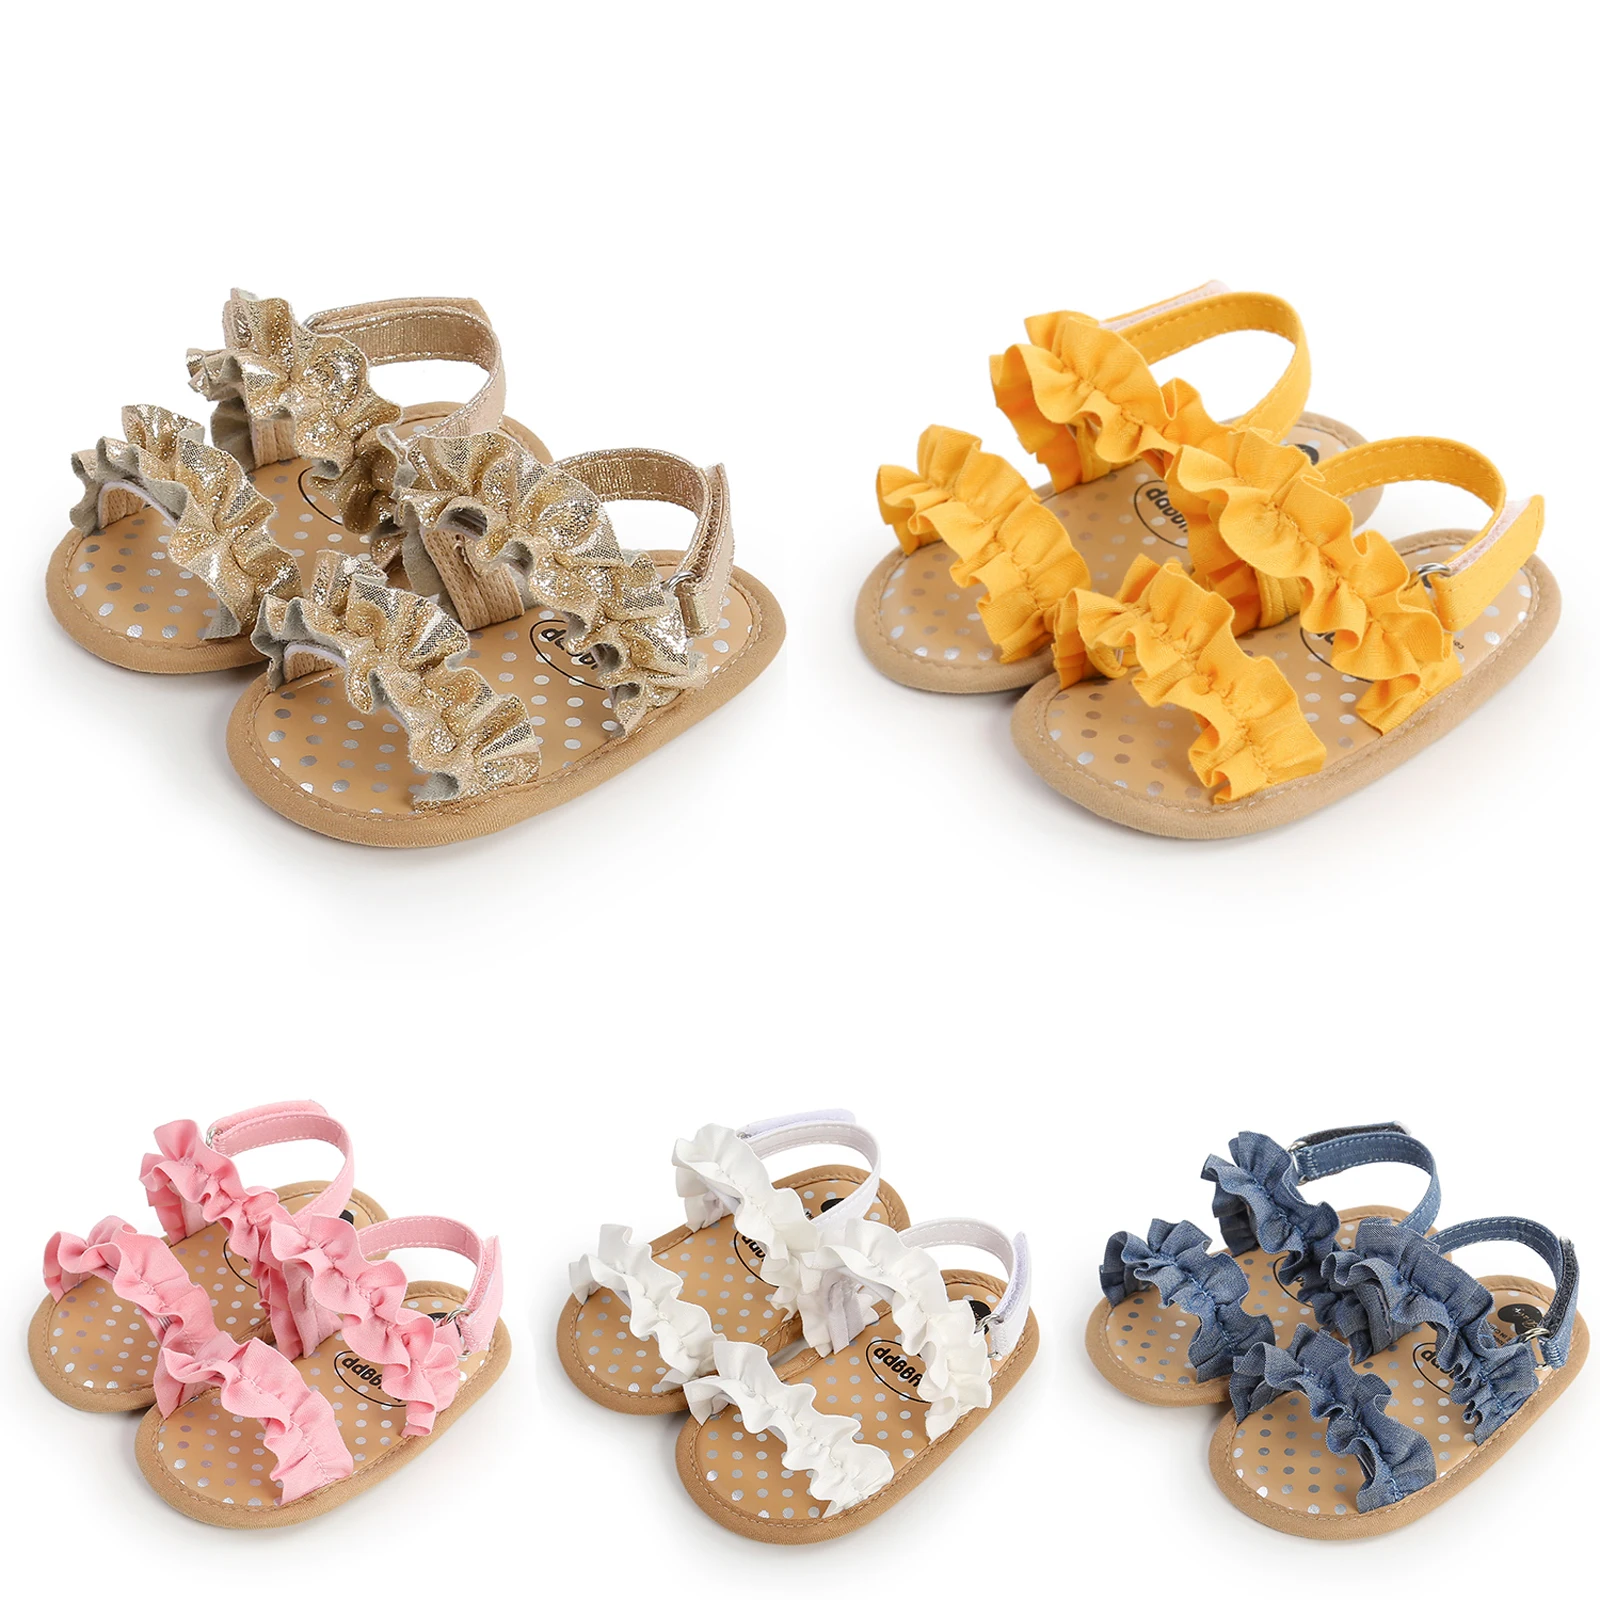 Fashion Bayi Baru Lahir Bayi Perempuan Sandal Lucu Musim Panas Lembut Sole Datar Putri Sepatu Bayi Non-Slip Pertama Walkers - 0